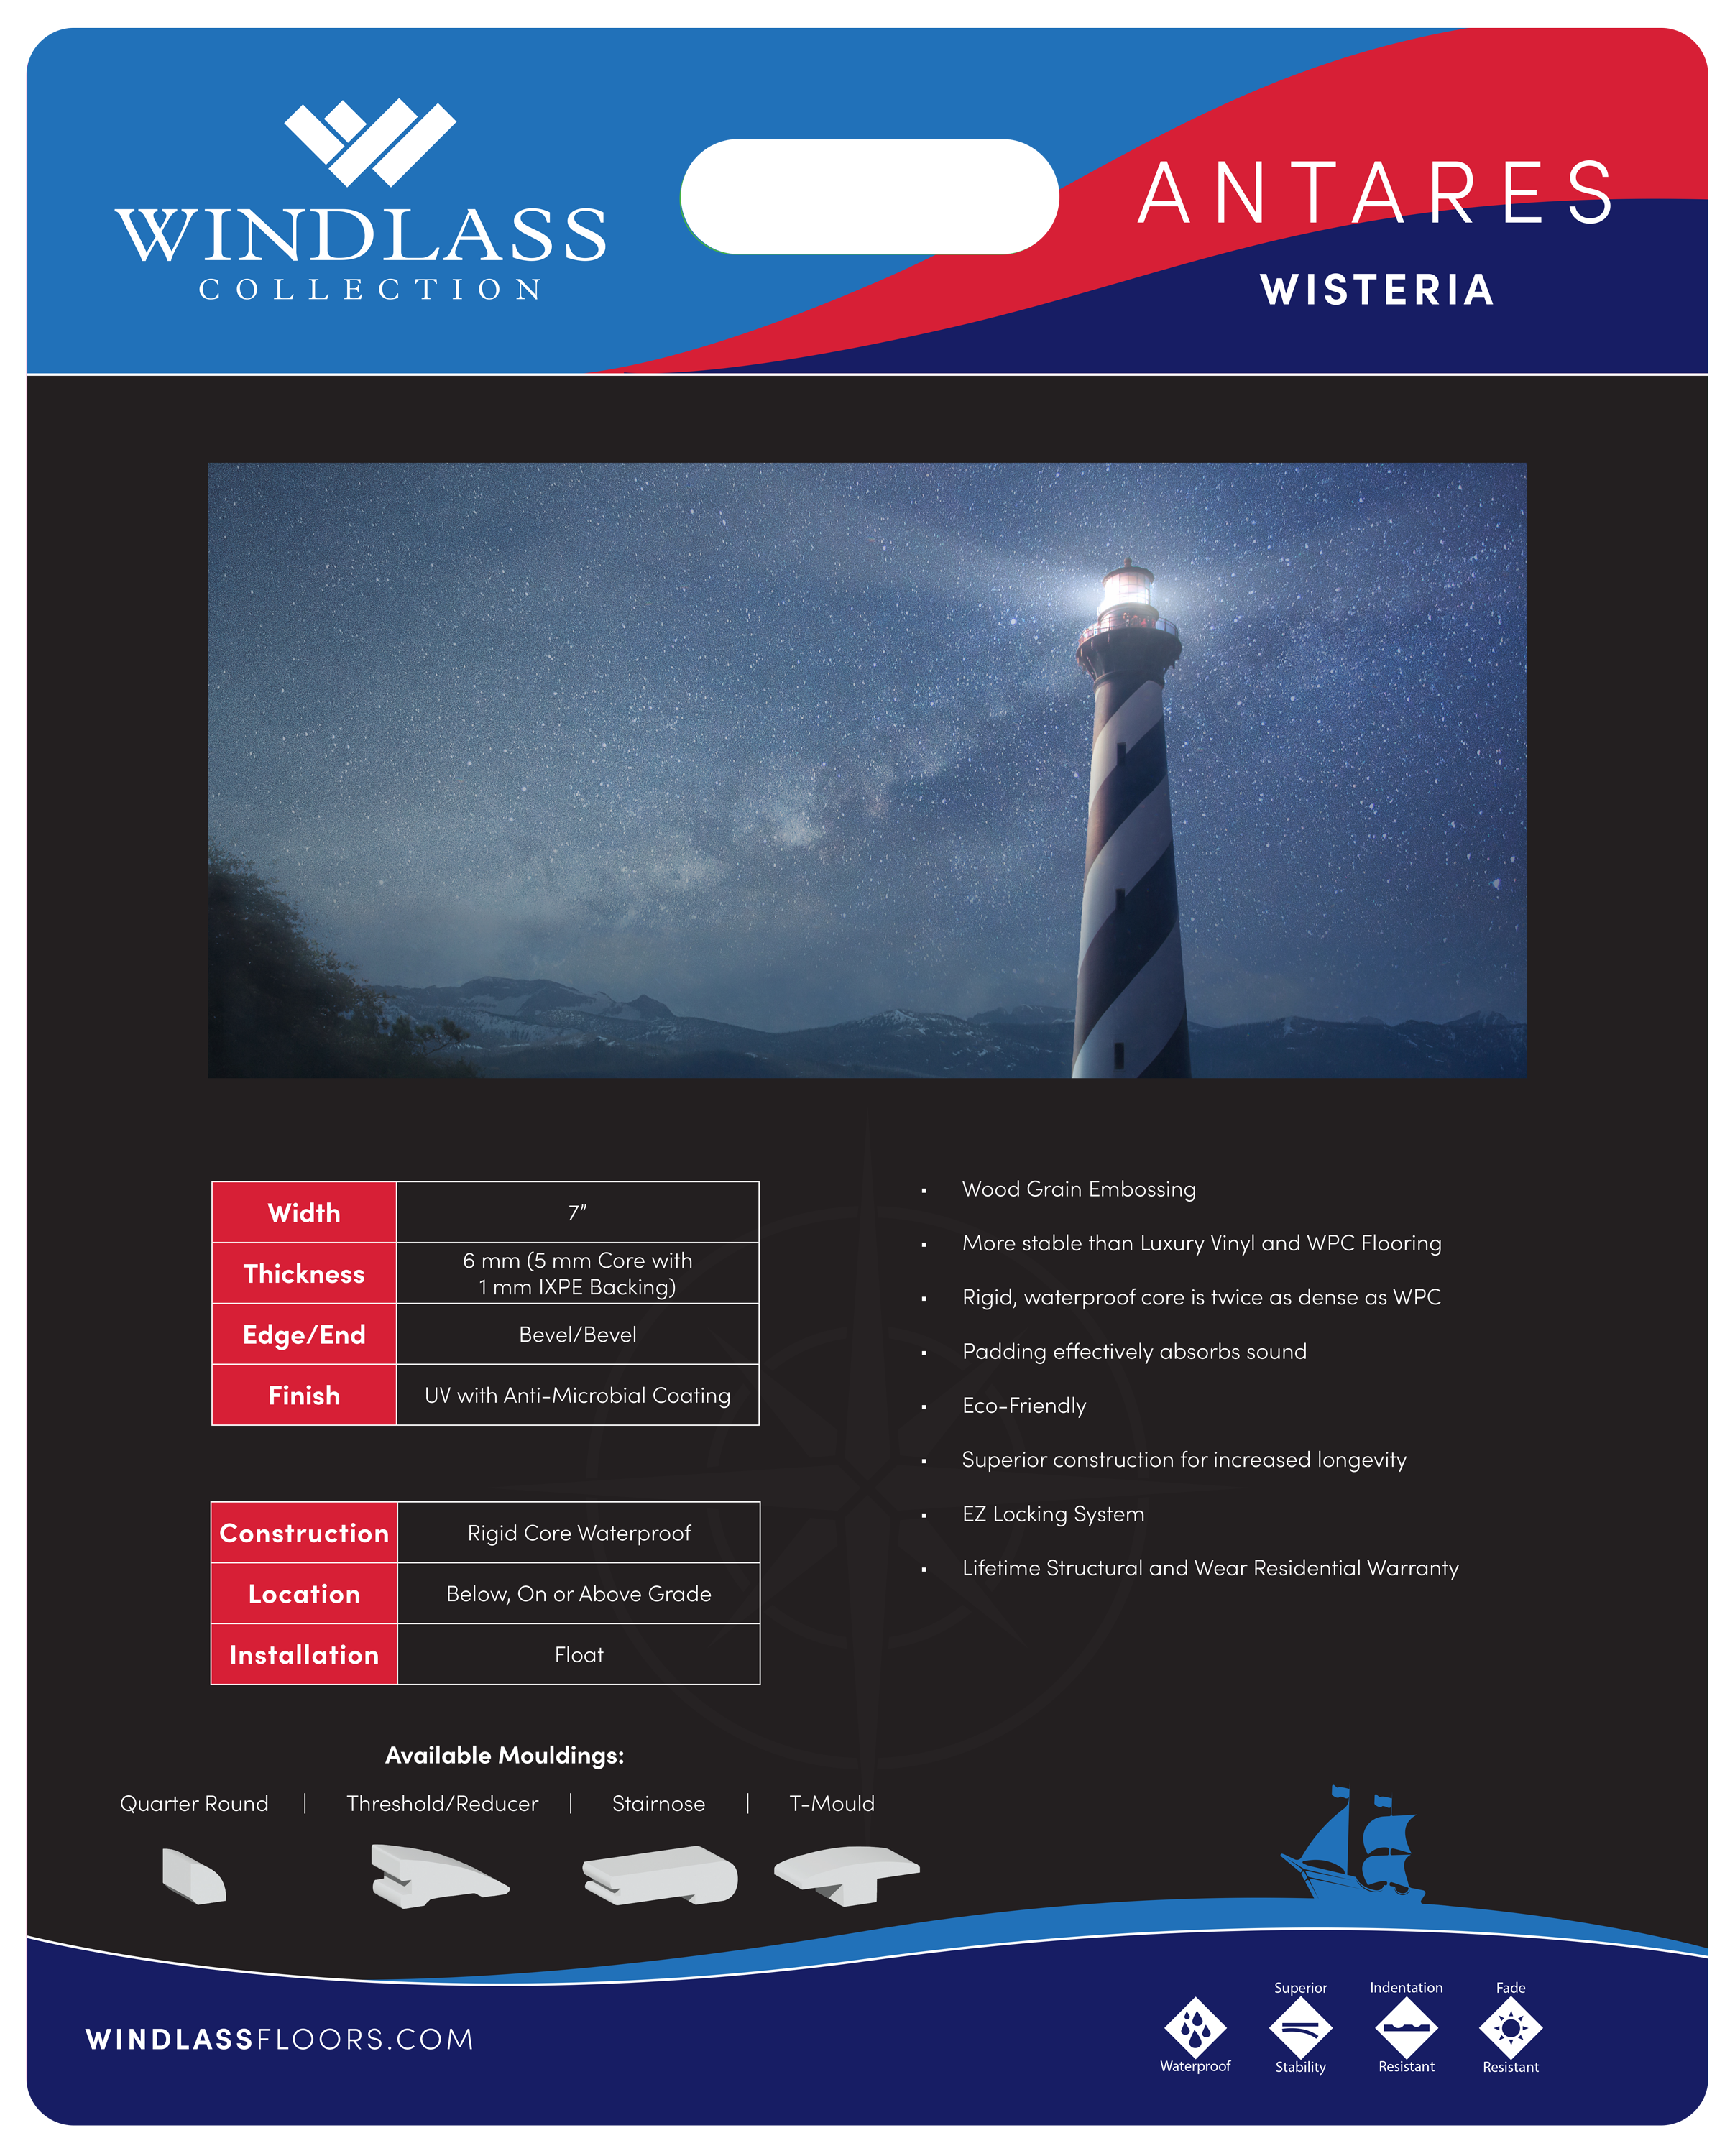 Windlass-Displayboard-ANTARES.png